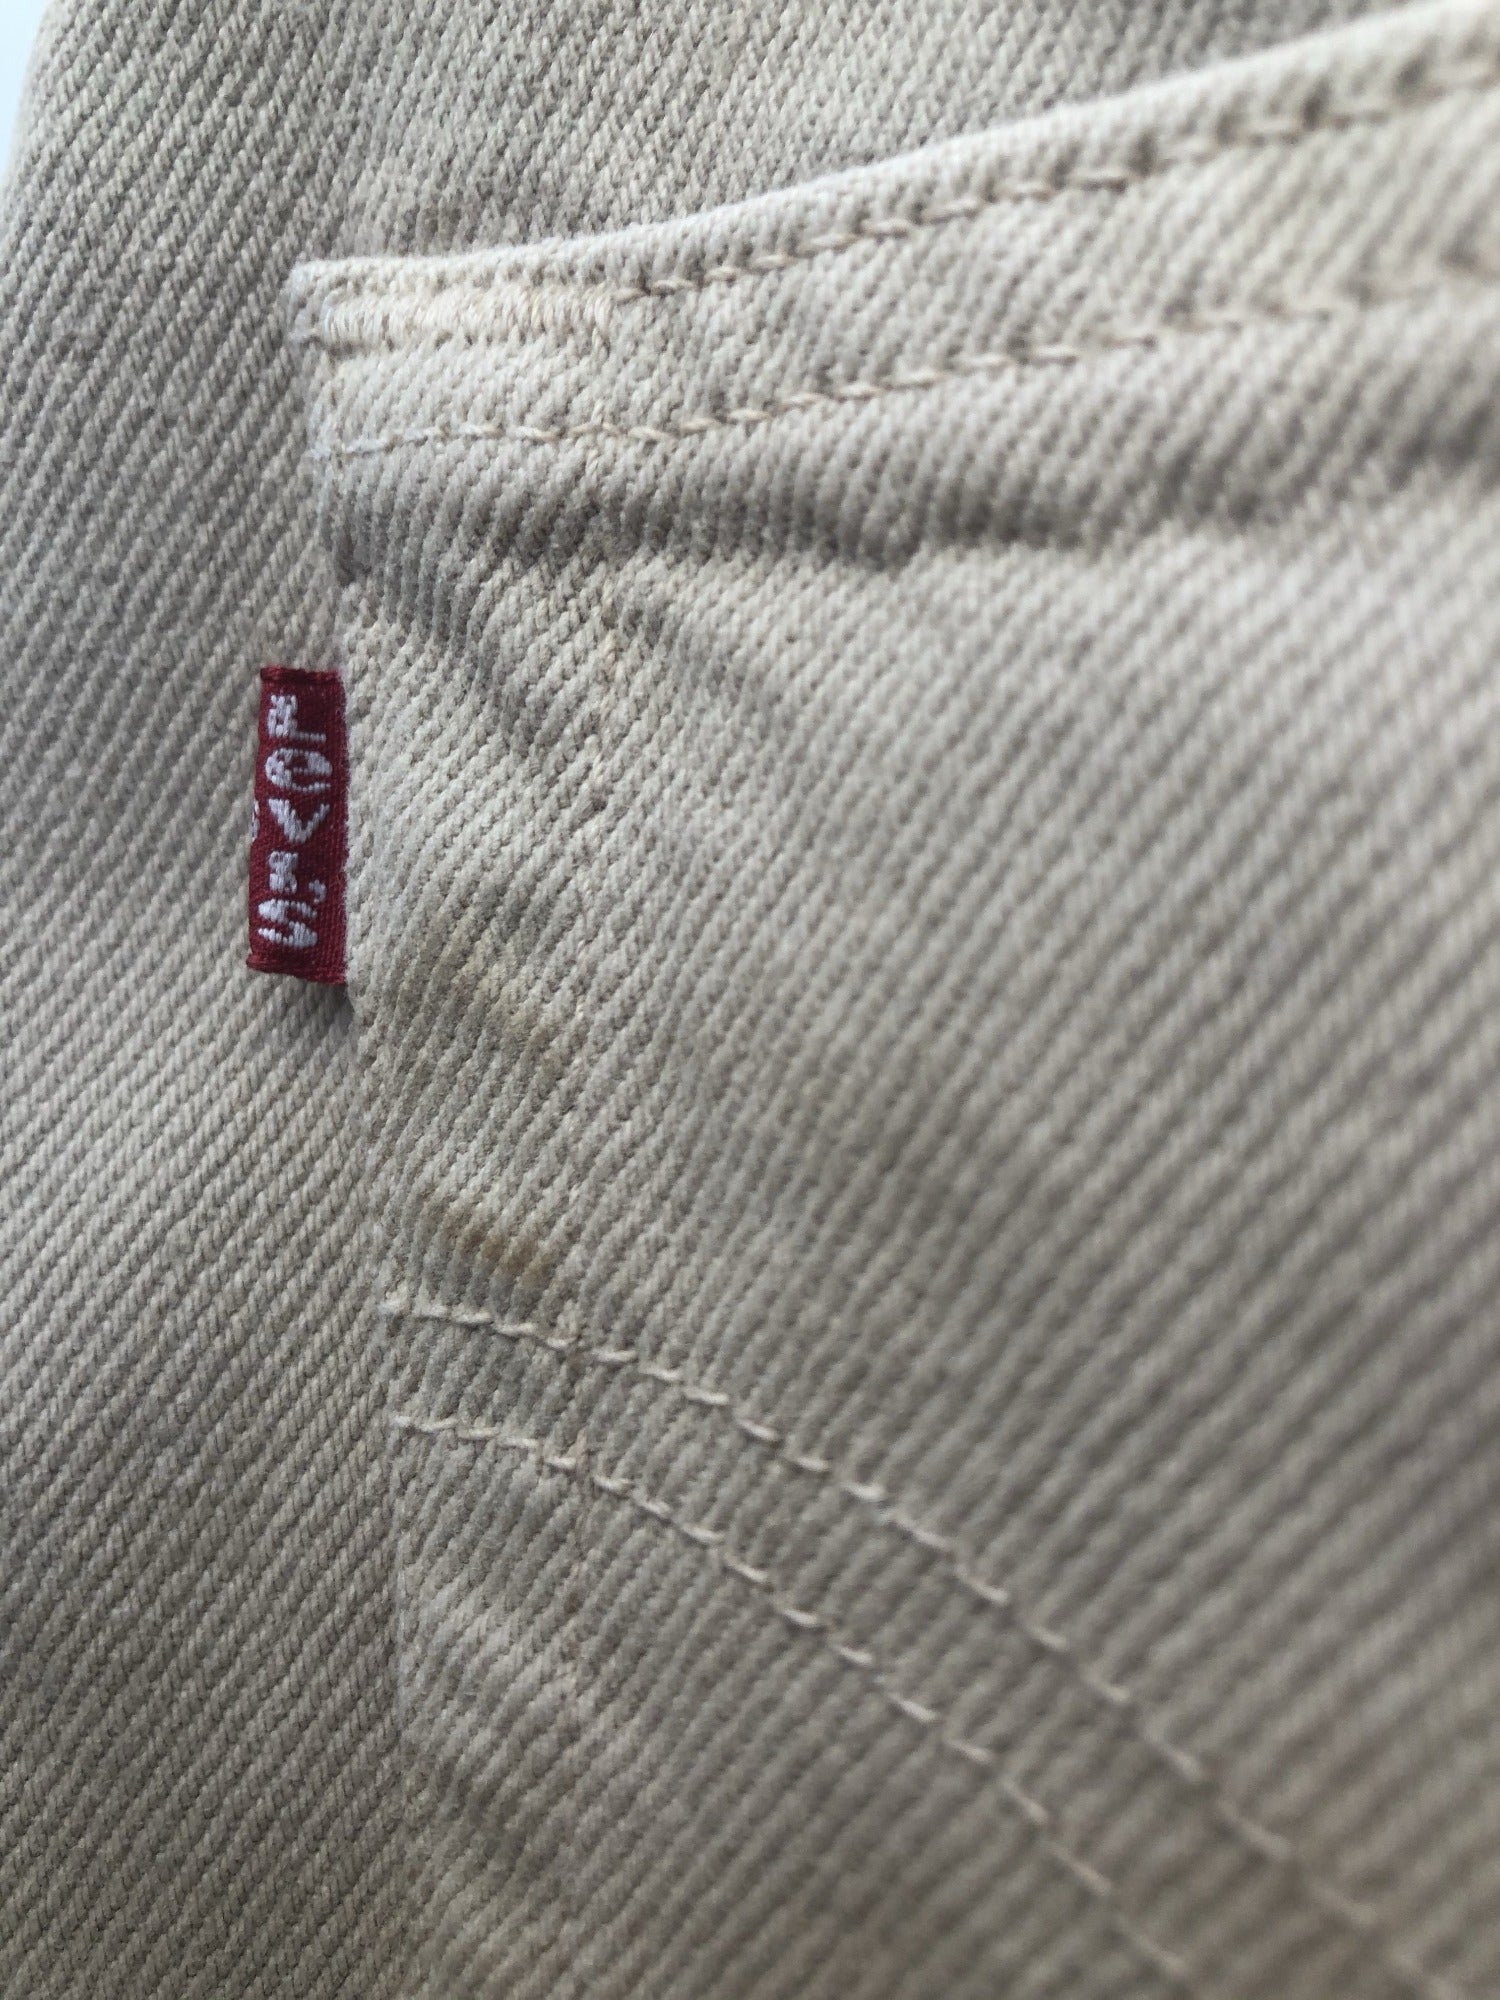 S  L28  W30  vintage  Urban Village Vintage  straight leg  straight cut  red tab  pockets  mens  Logo design  logo  levis strauss  levis  levi strauss  jeans  jean  jacket  denim  beige  501 xx  501